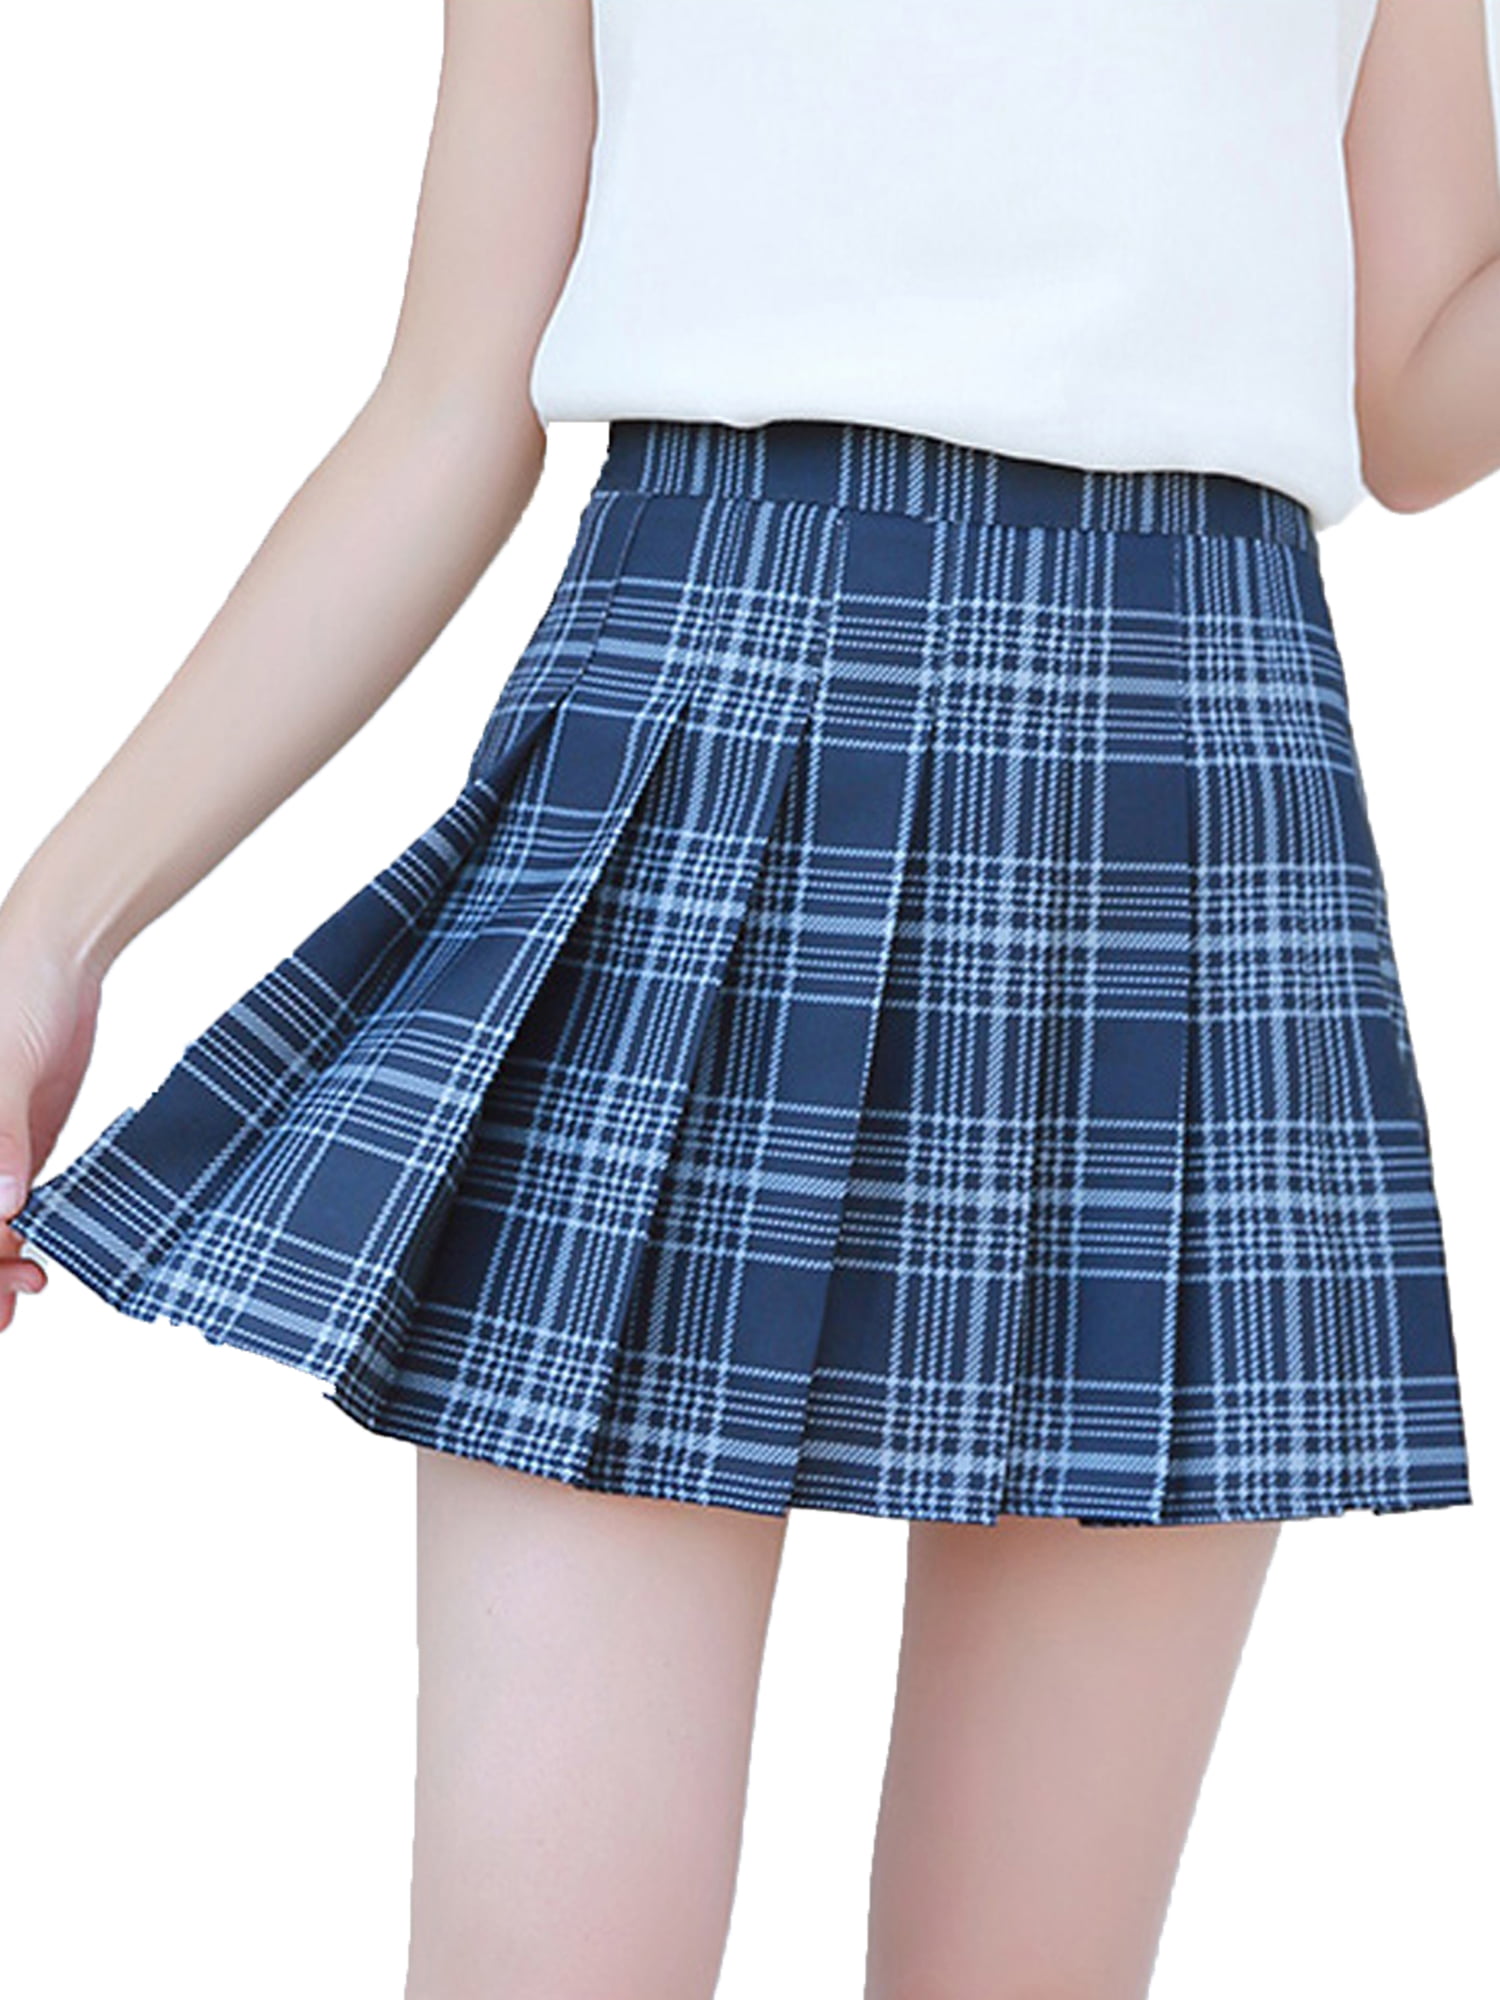 None Branded Women Girls Short High Waist Pleated Skater Tennis School Skirt S-XL 